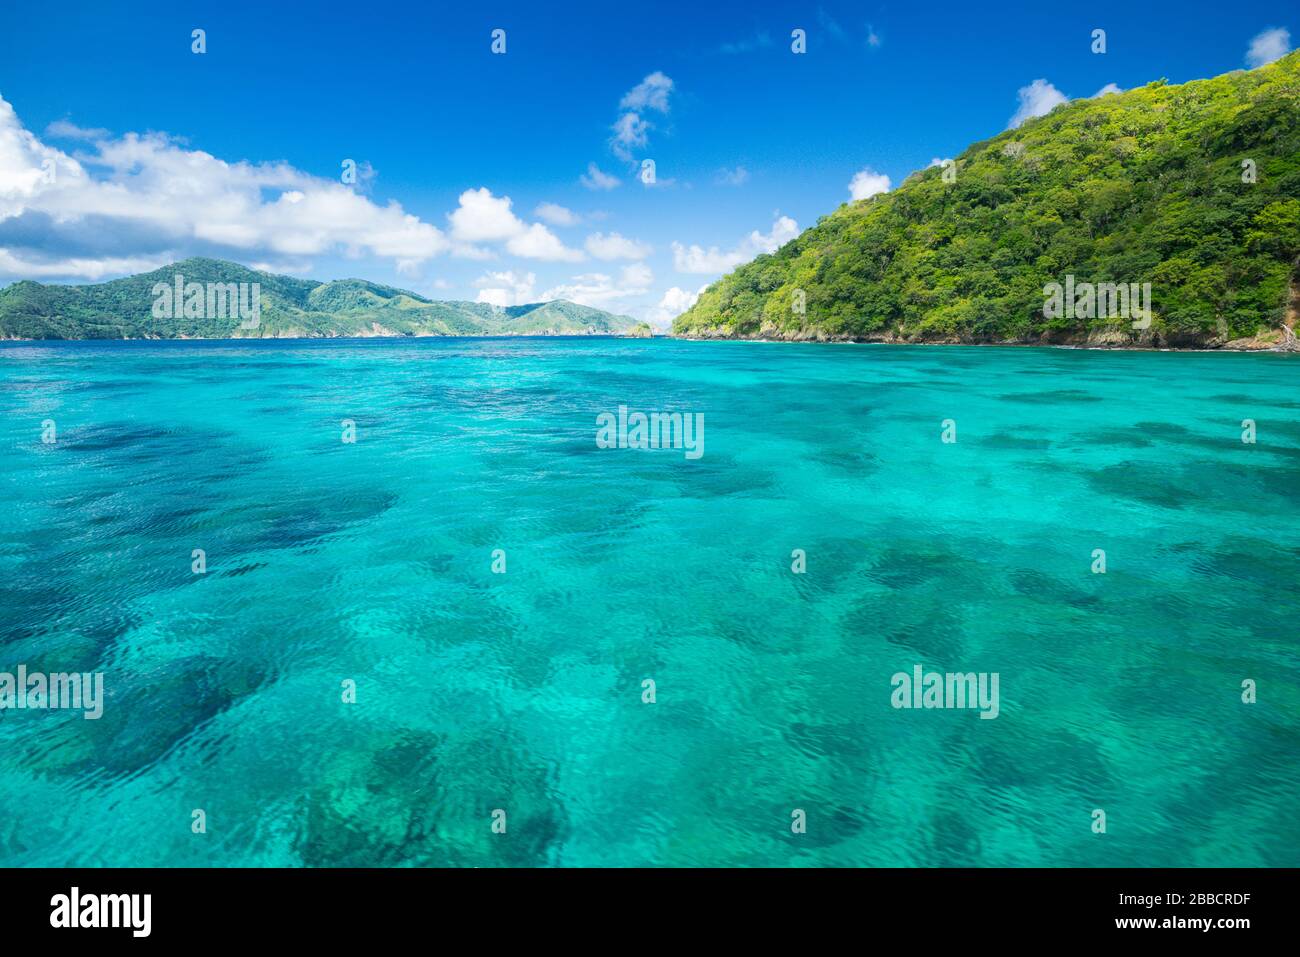 An ocean scene in Tobago, Trinidad and Tobago Stock Photo